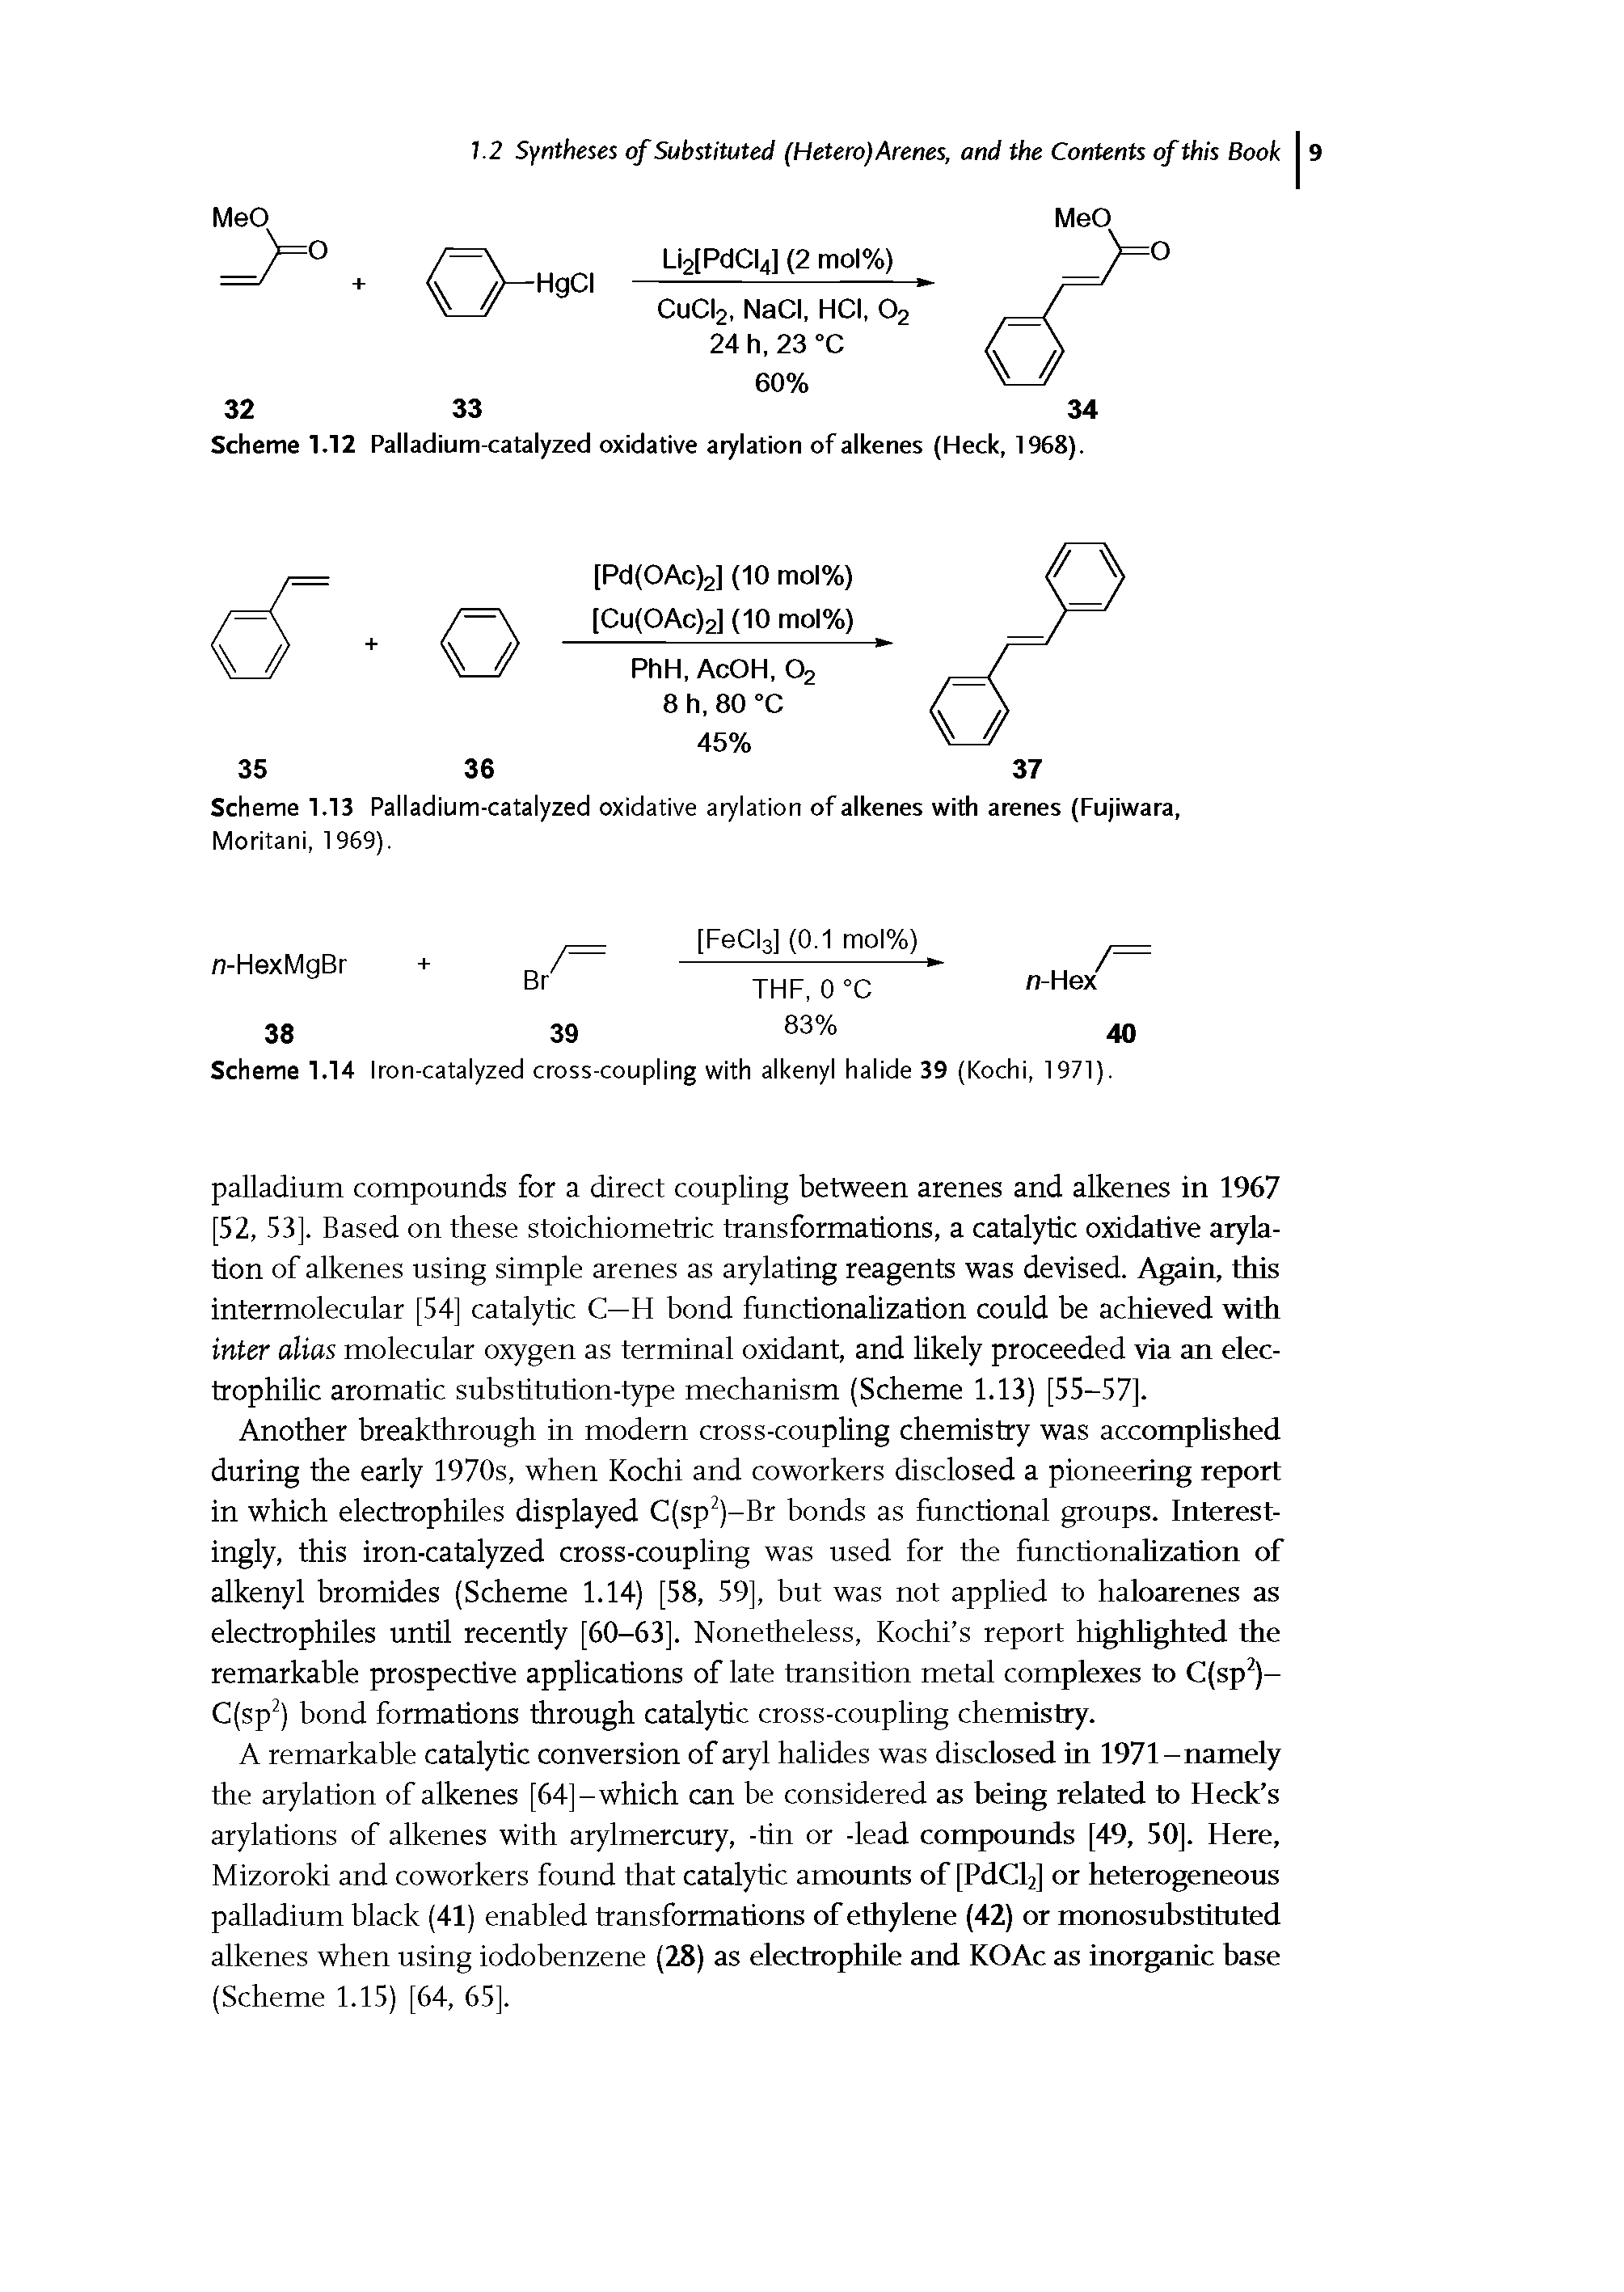 Scheme 1.14 Iron-catalyzed cross-coupling with alkenyl halide 39 (Kochi, 1971).